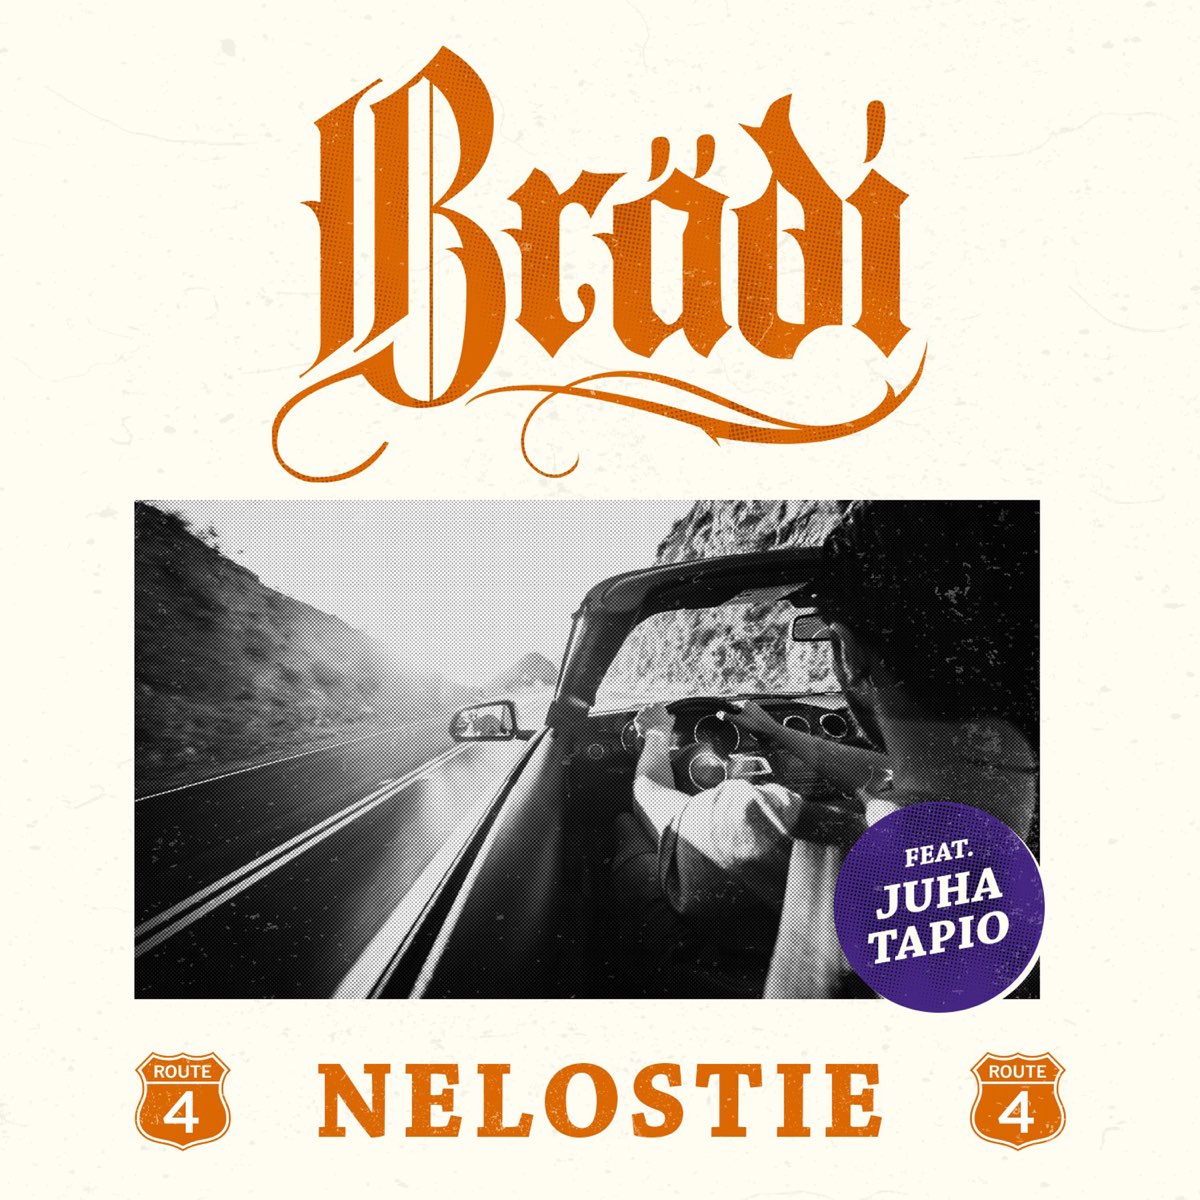 Nelostie (feat. Juha Tapio) - Single by Brädi on Apple Music